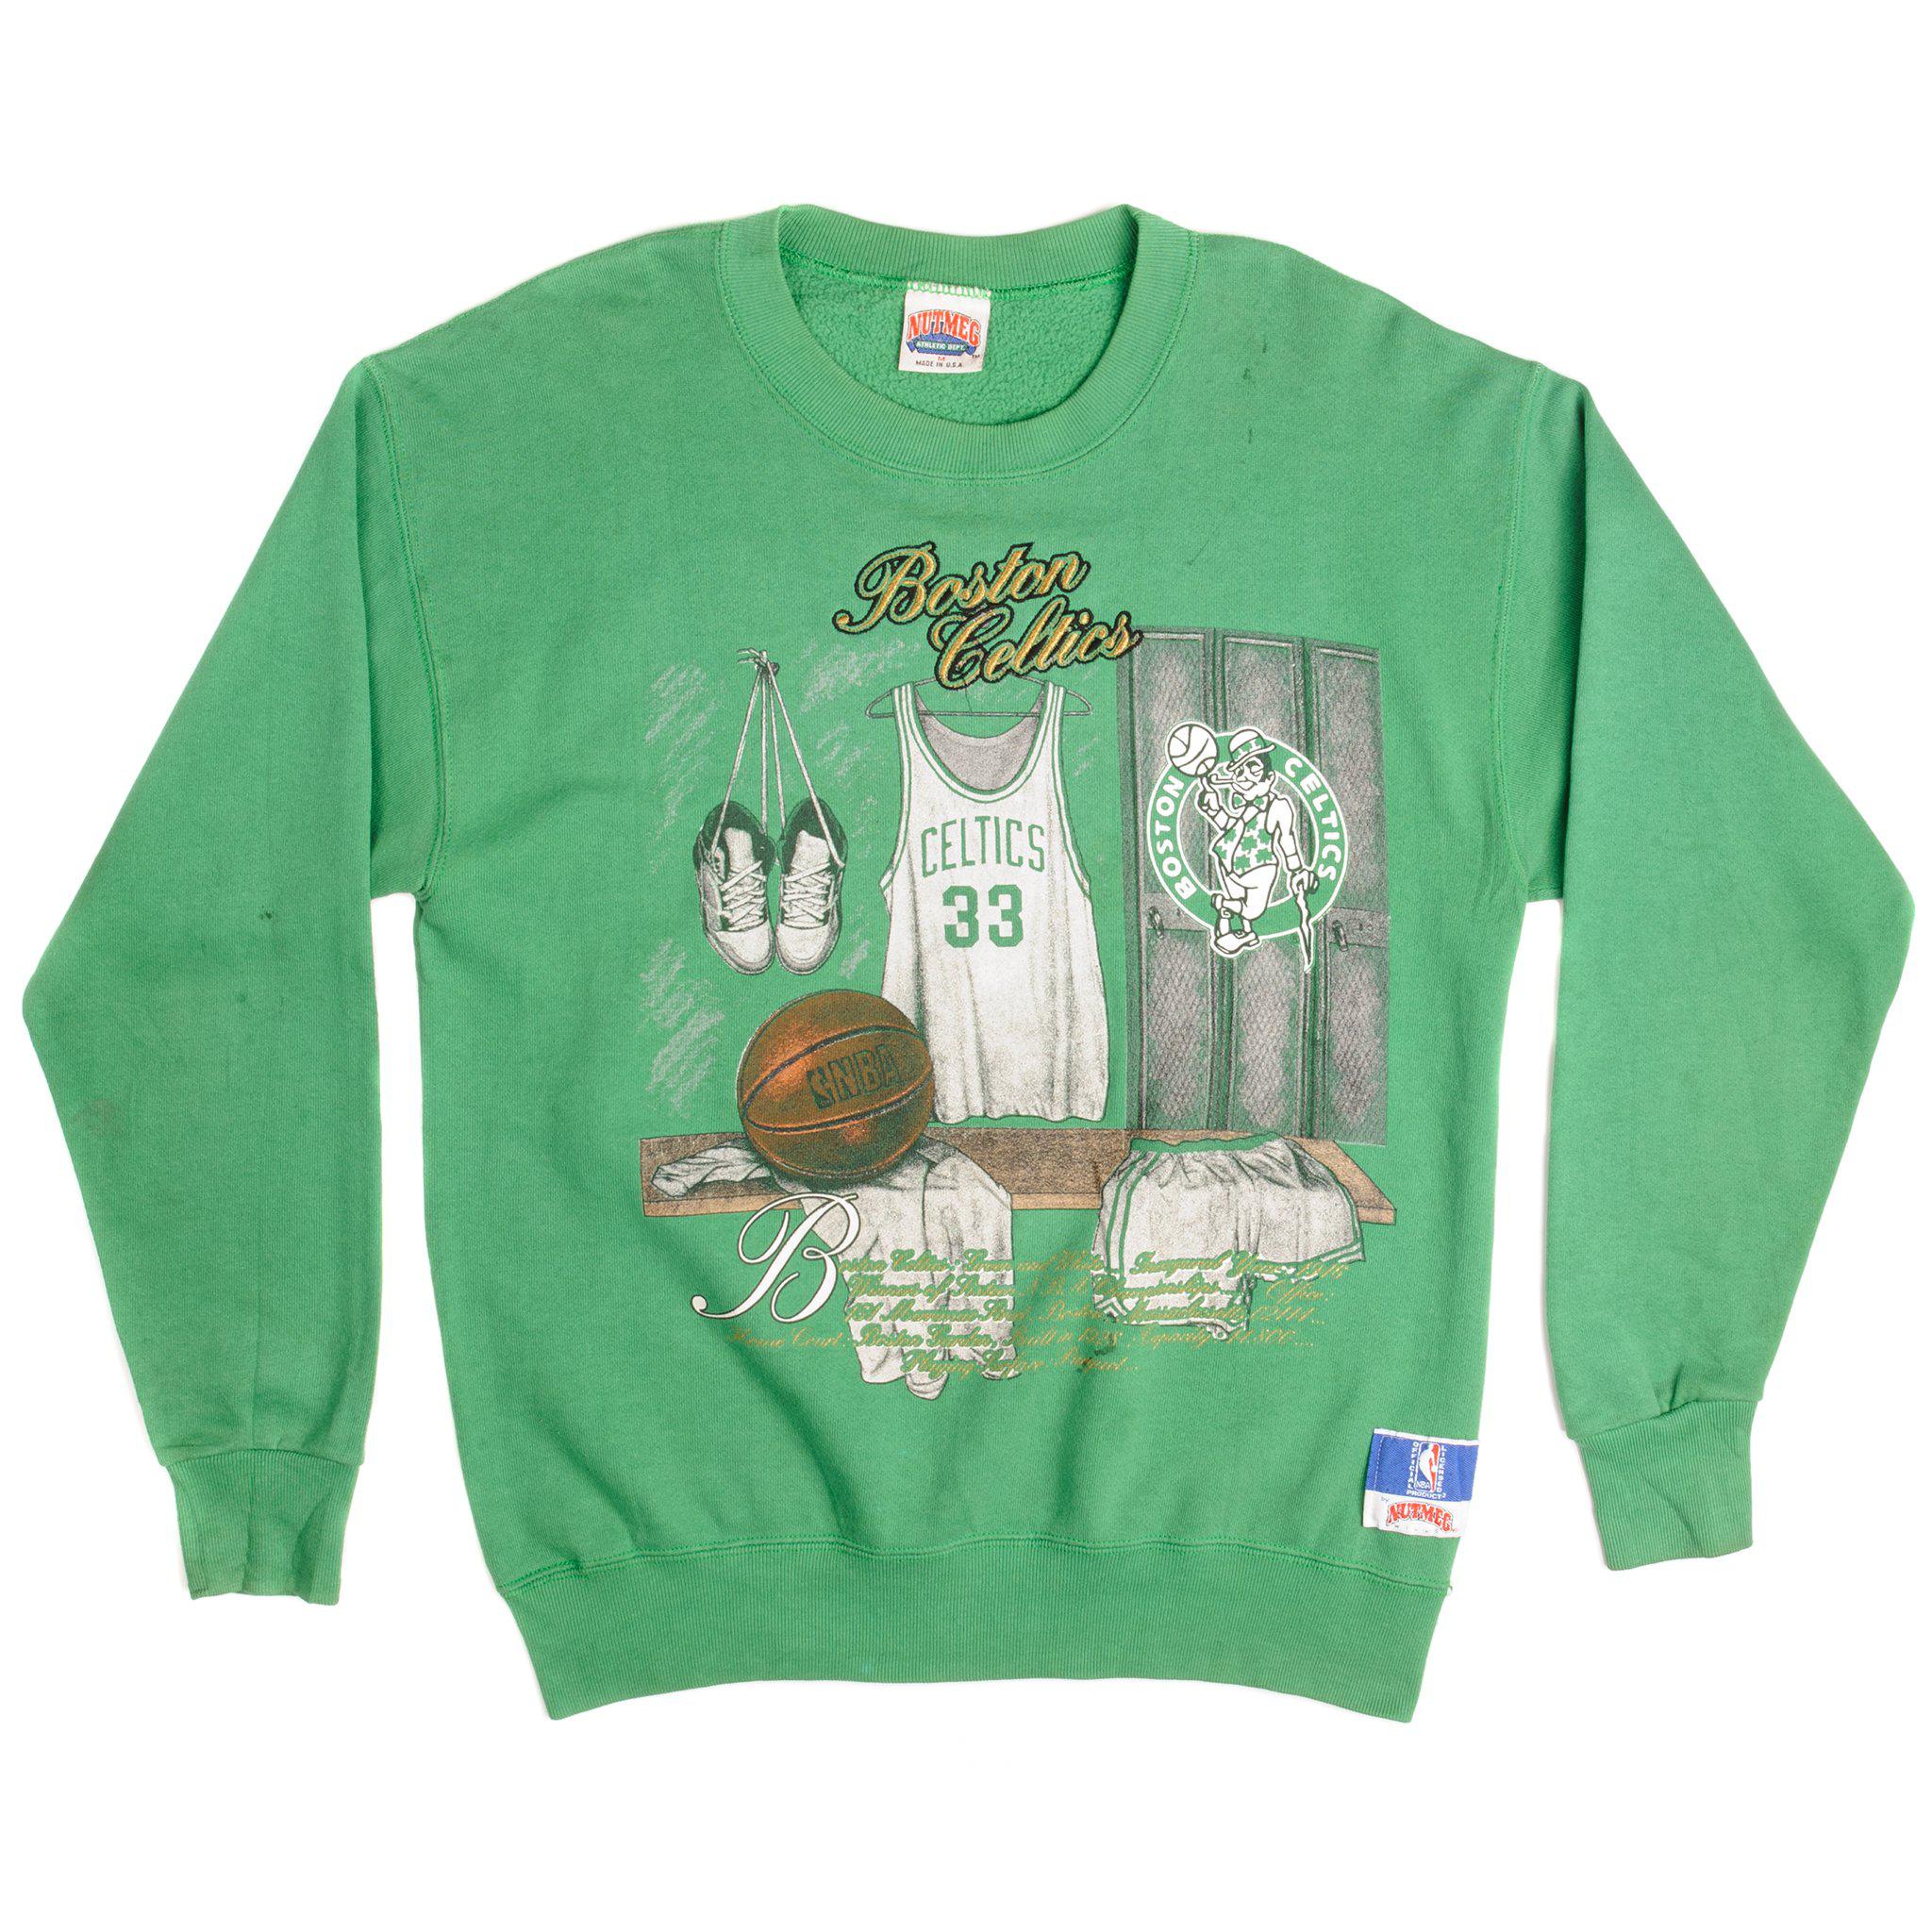 Vintage NBA Boston Celtics Sweatshirt Size Medium Made in USA